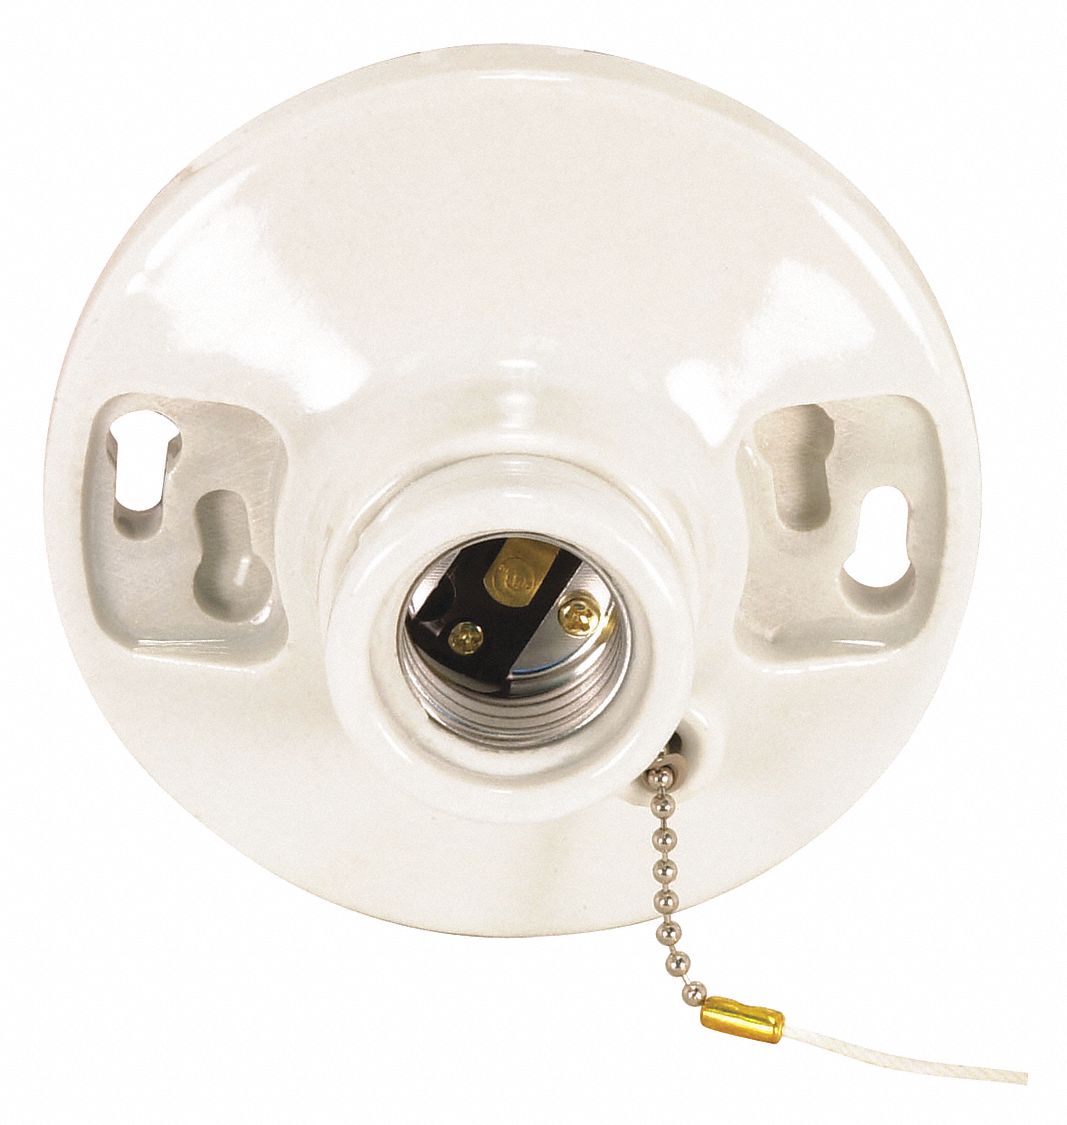 Lampholder: Lamp Holder, Medium Screw (E26), On-Off Pull Chain Ceiling Receptacle, 250 W Watt